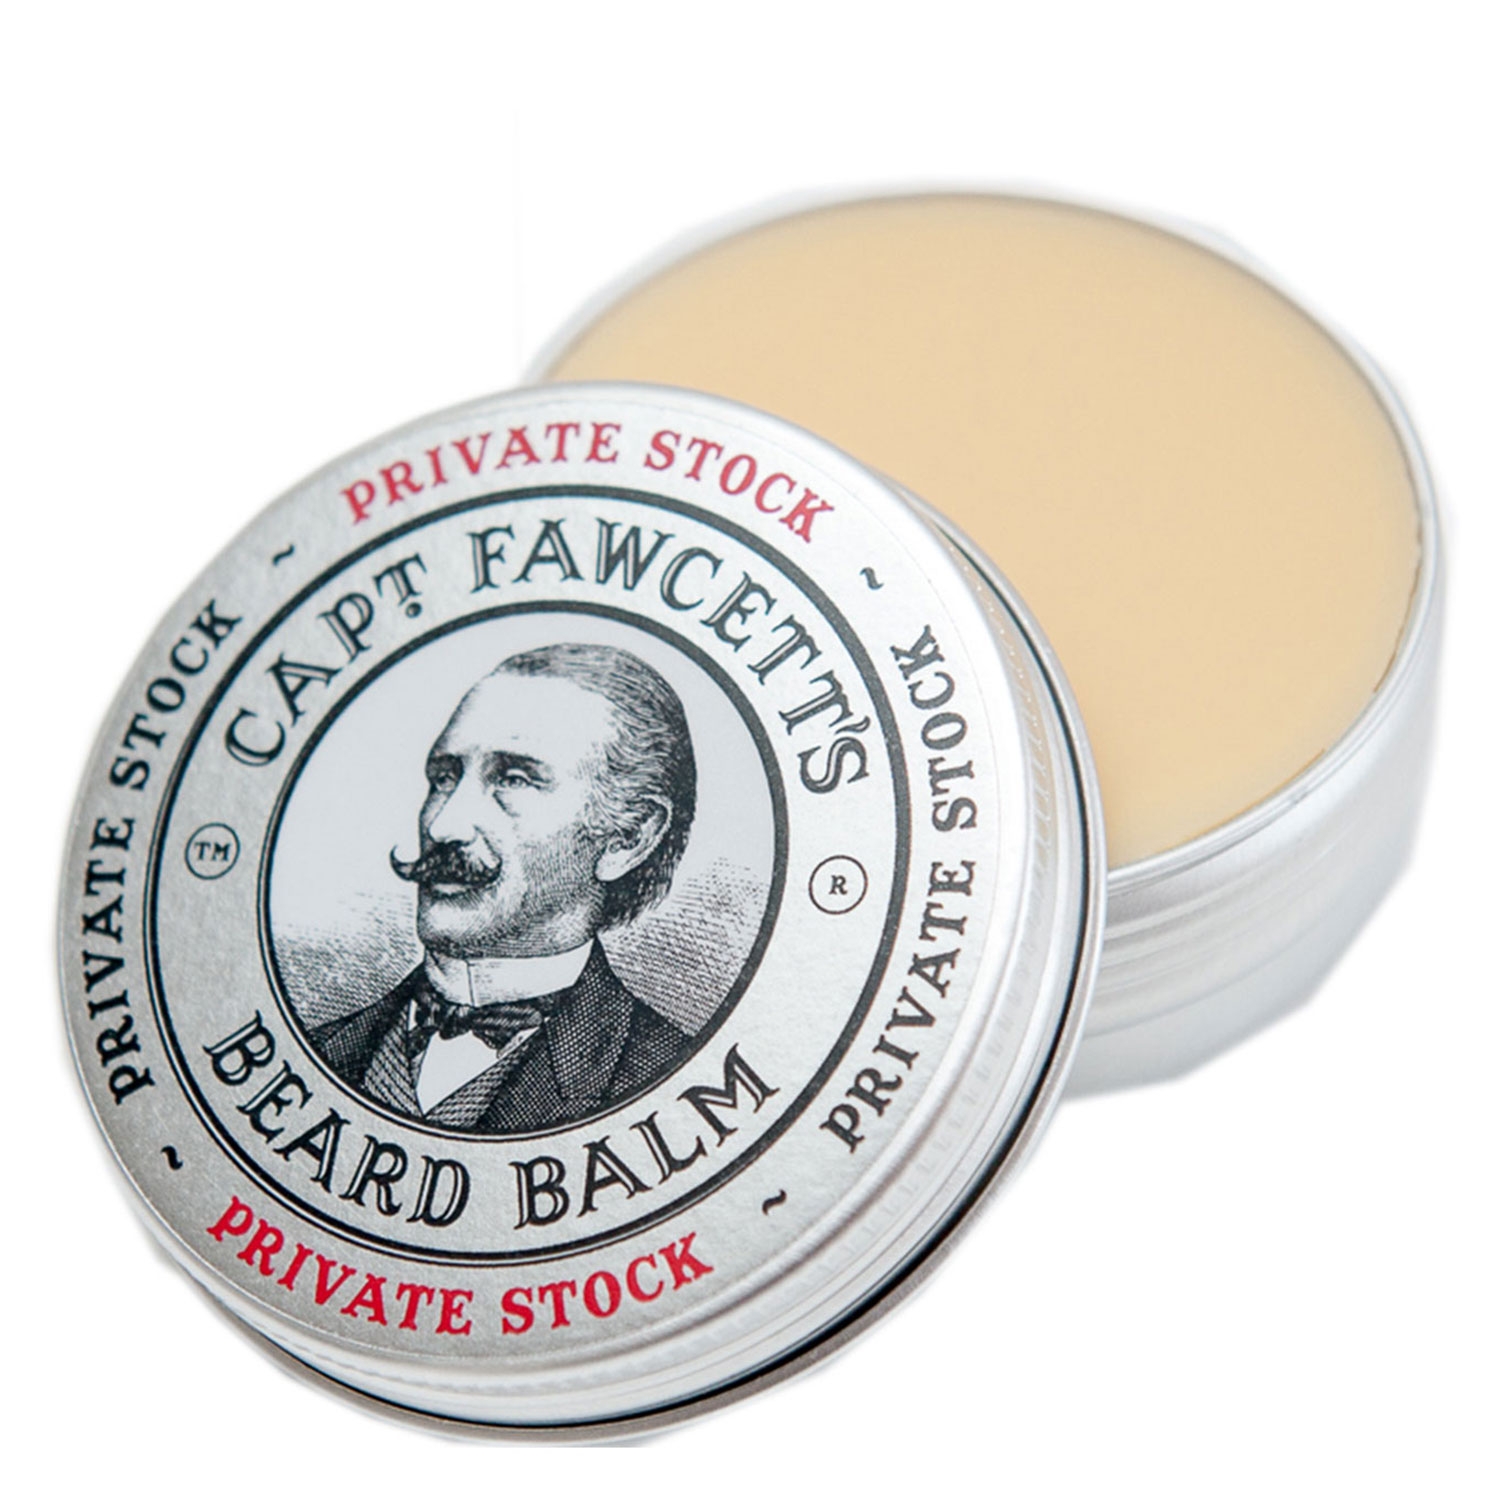 Image du produit de Capt. Fawcett Care - Private Stock Beard Balm